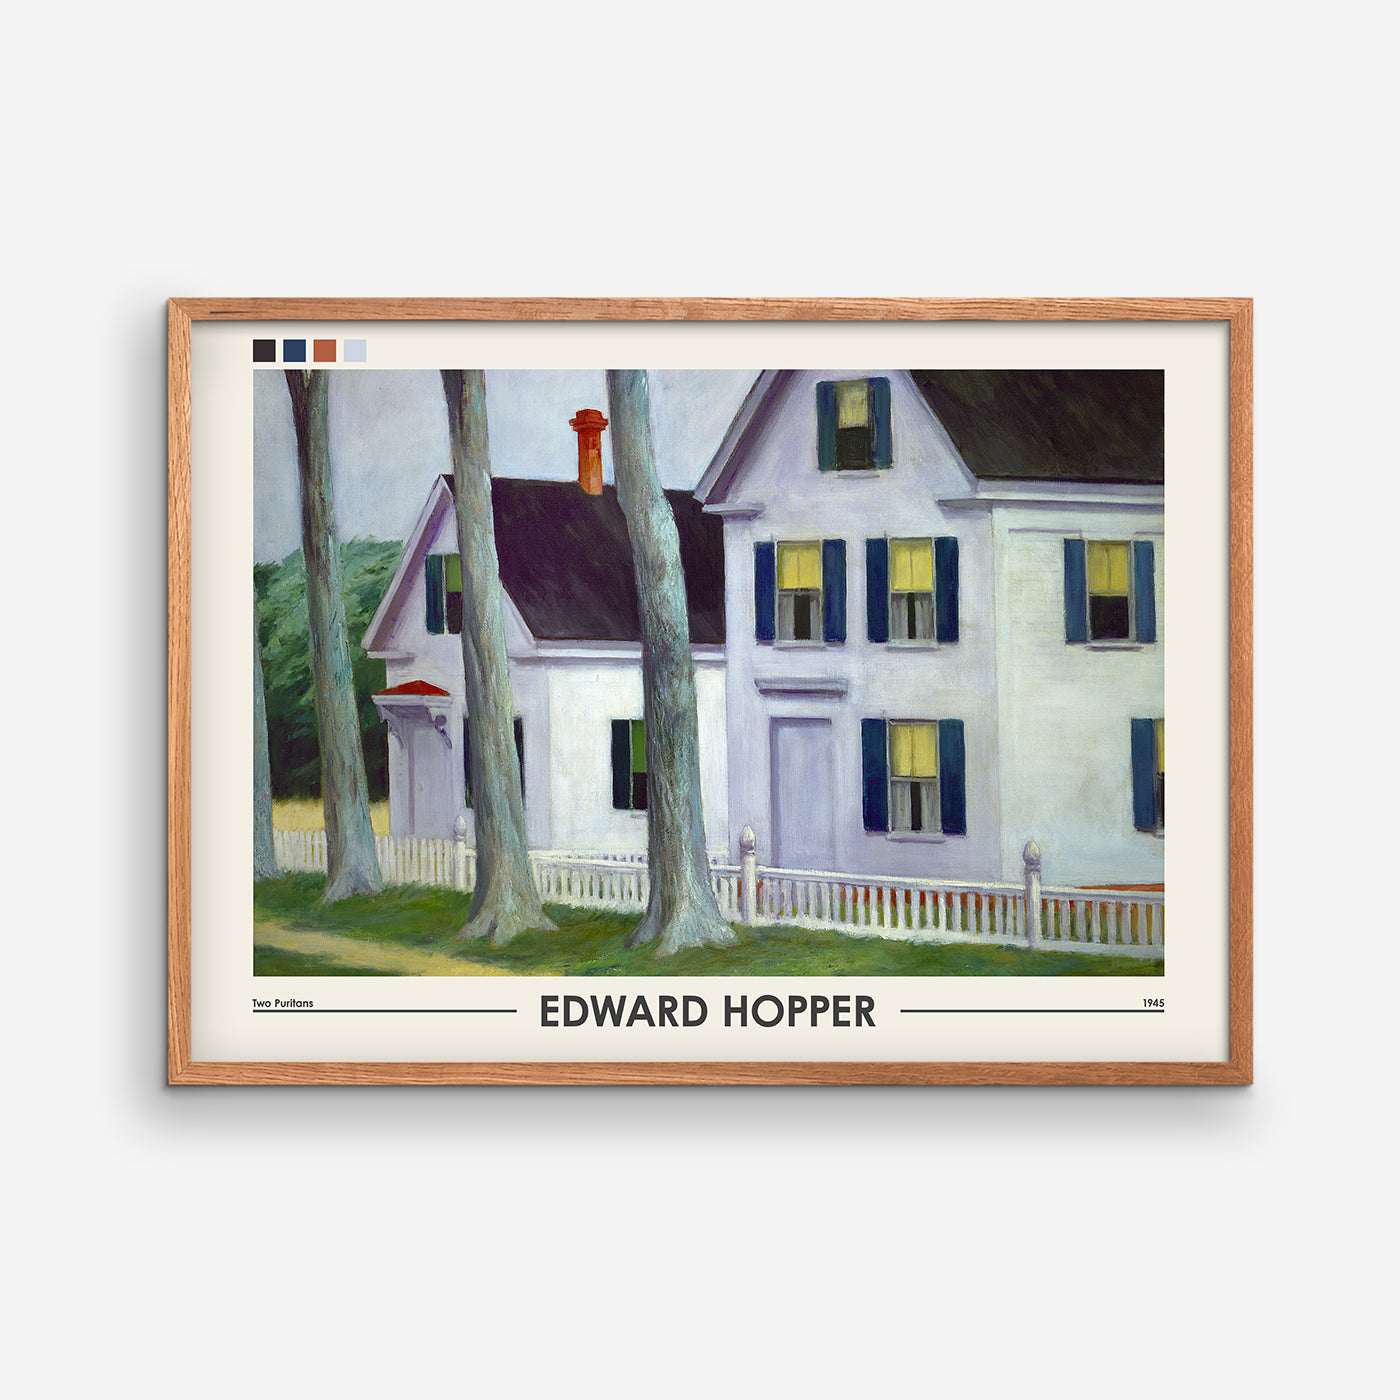 Two Puritans - Edward Hopper